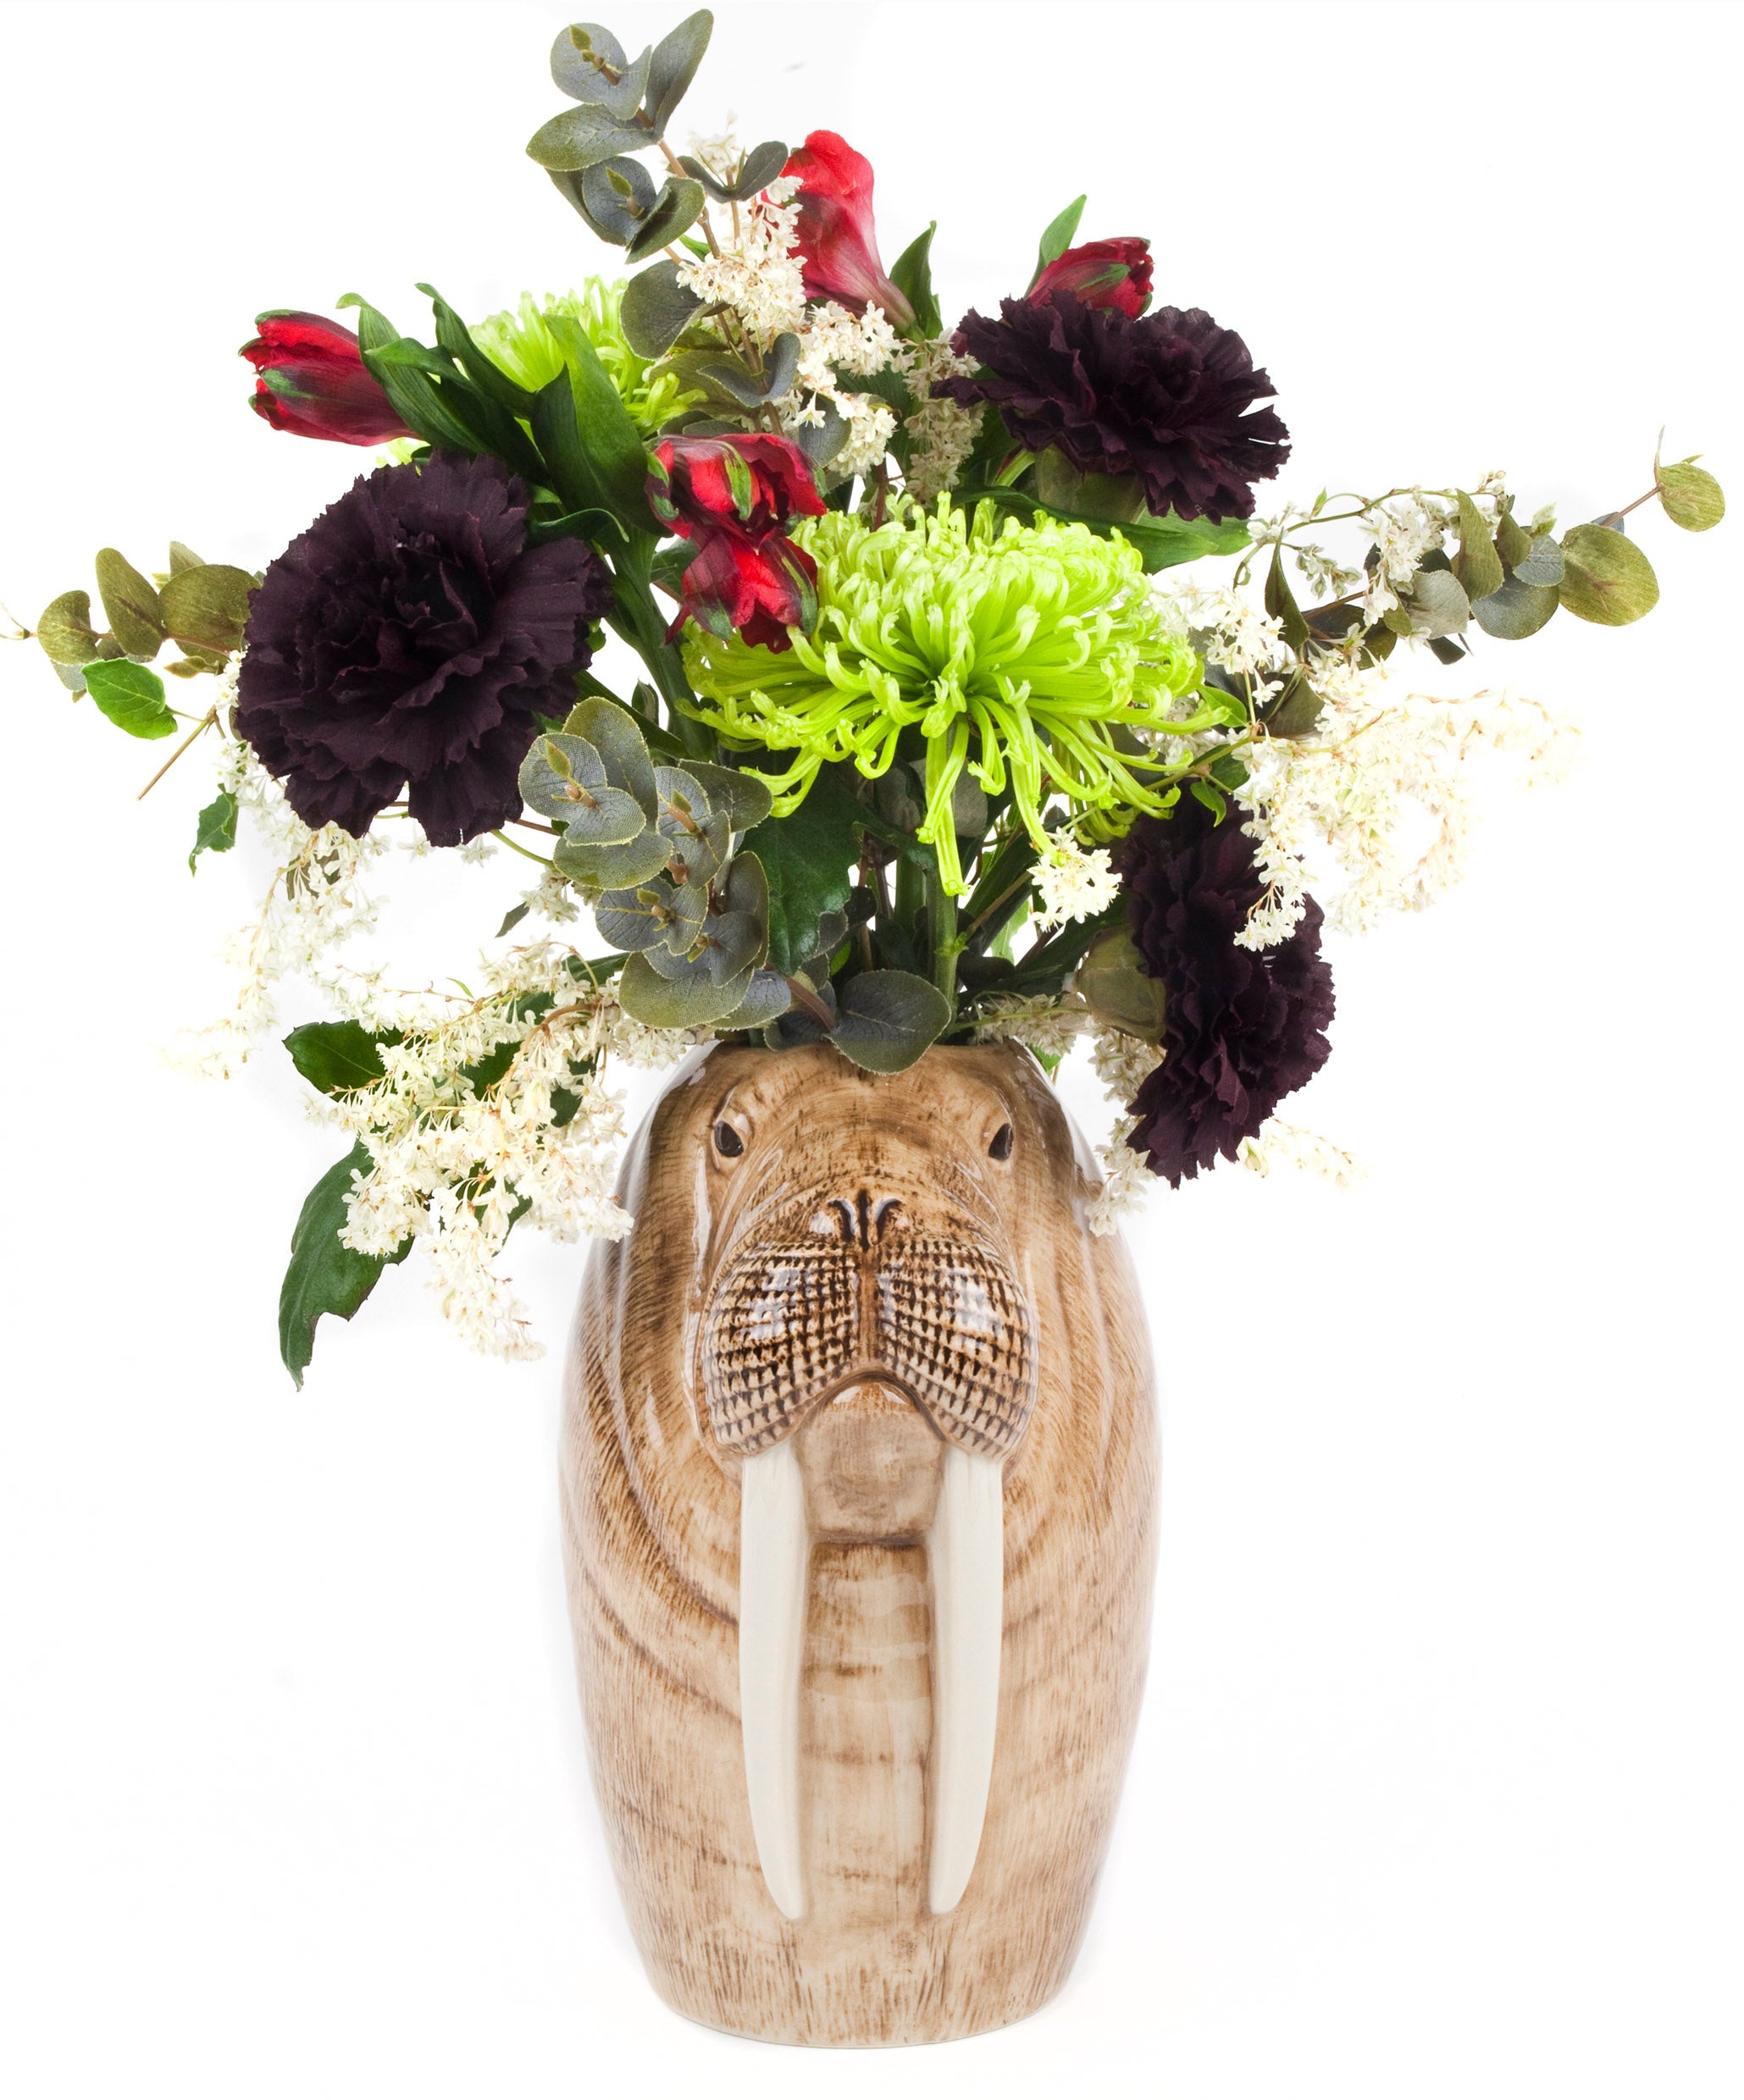 Walrus flower vase